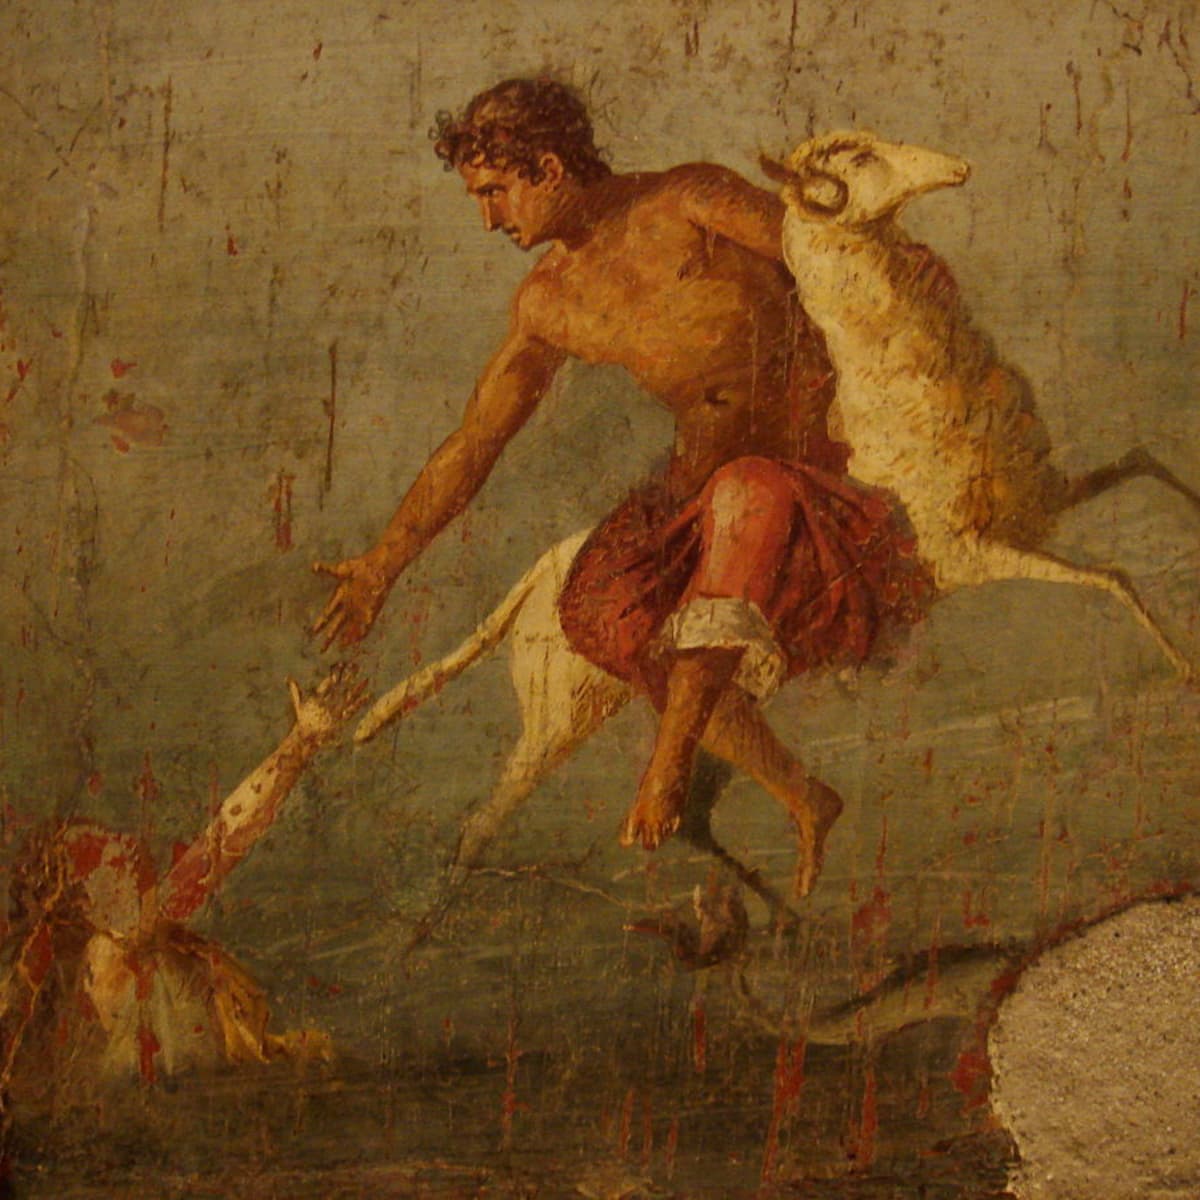 Jason and the Argonauts: The Myth of the Golden Fleece